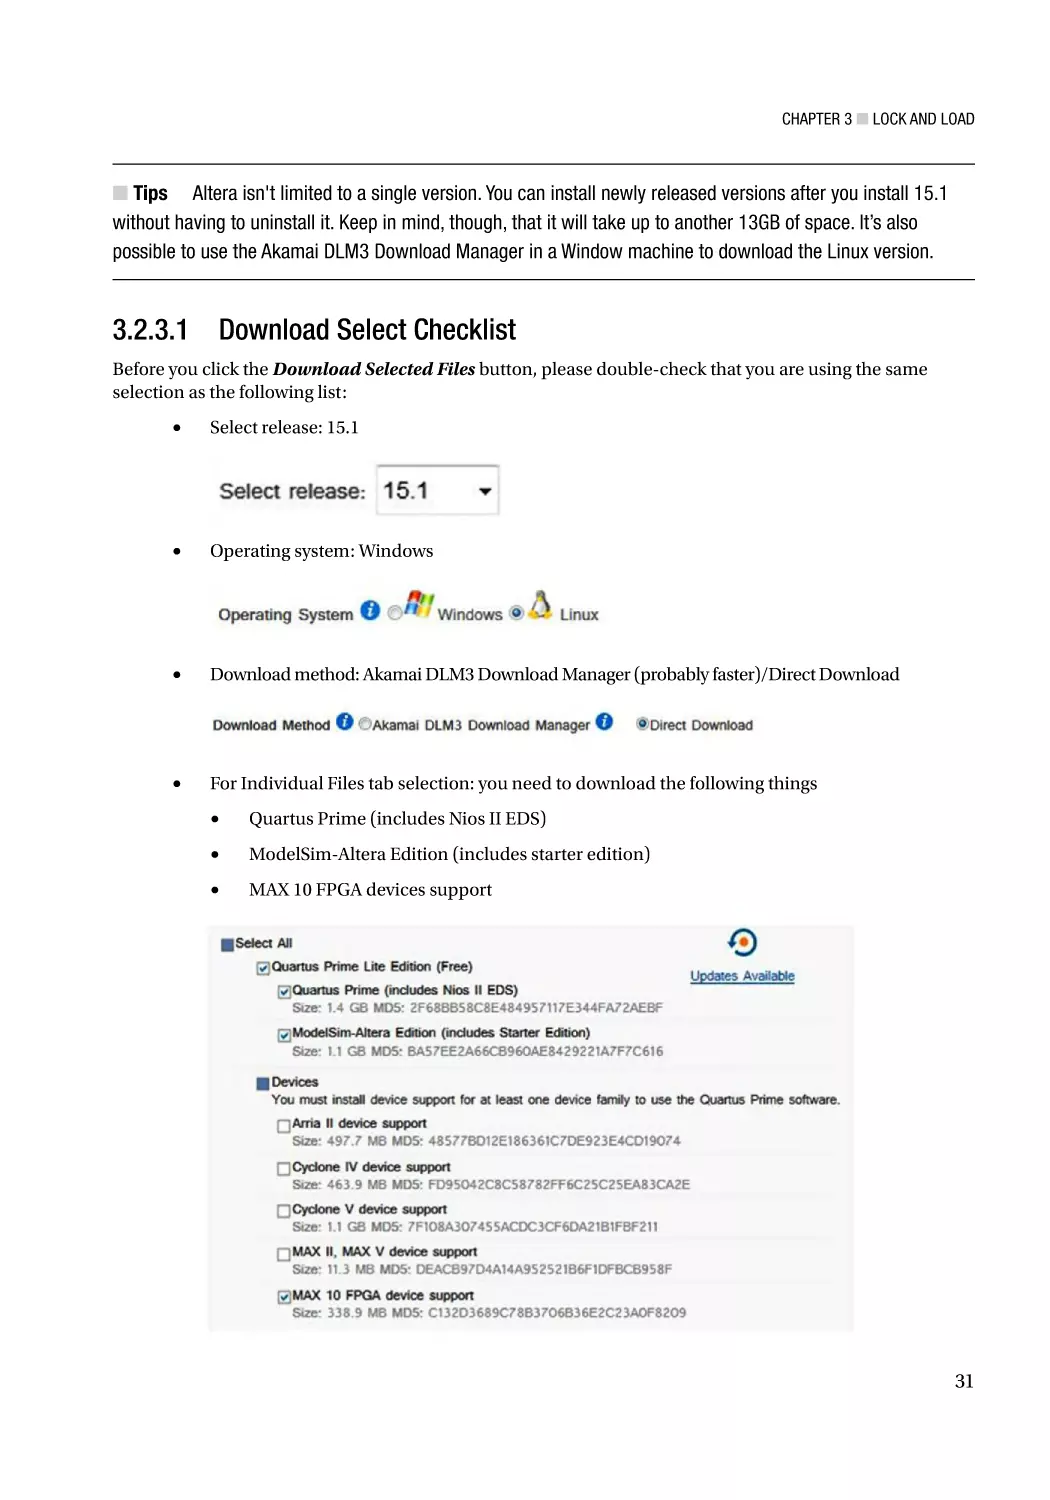 3.2.3.1 Download Select Checklist